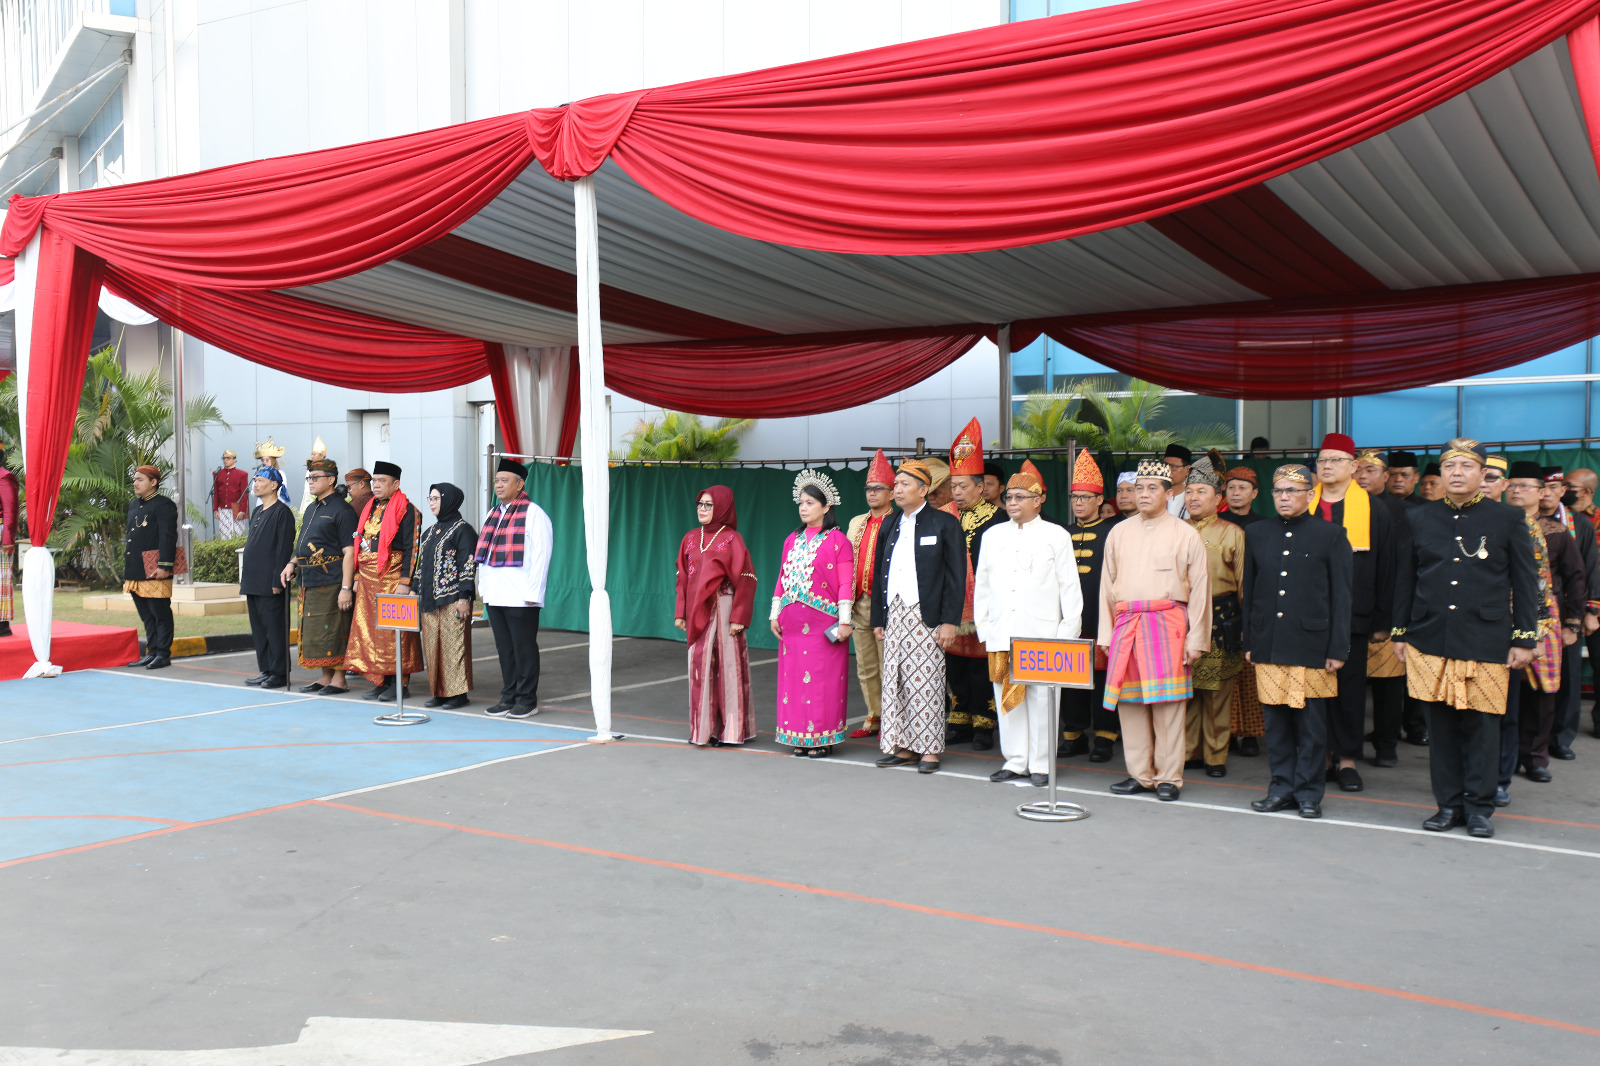 Jajaran Pejabat Tinggi d lingkungan Badan Nasional Penanggulangan Bencana (BNPB) menggunakan pakaian adat saat merayakan Hari Ulang Tahun Ke-78 Republik Indonesia, yang diselenggarakan di halaman Gedung Graha BNPB, Jakarta pada (17/8). 